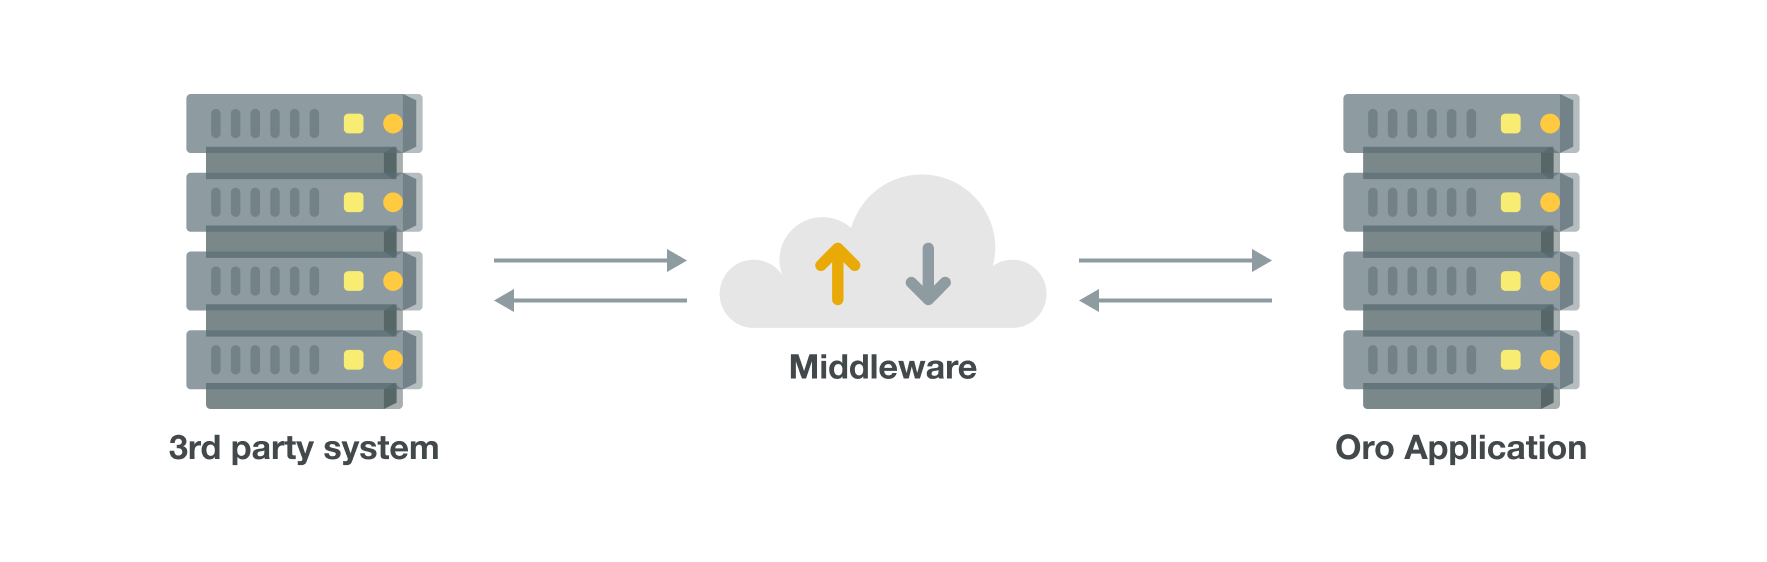 Illustrating how middleware works